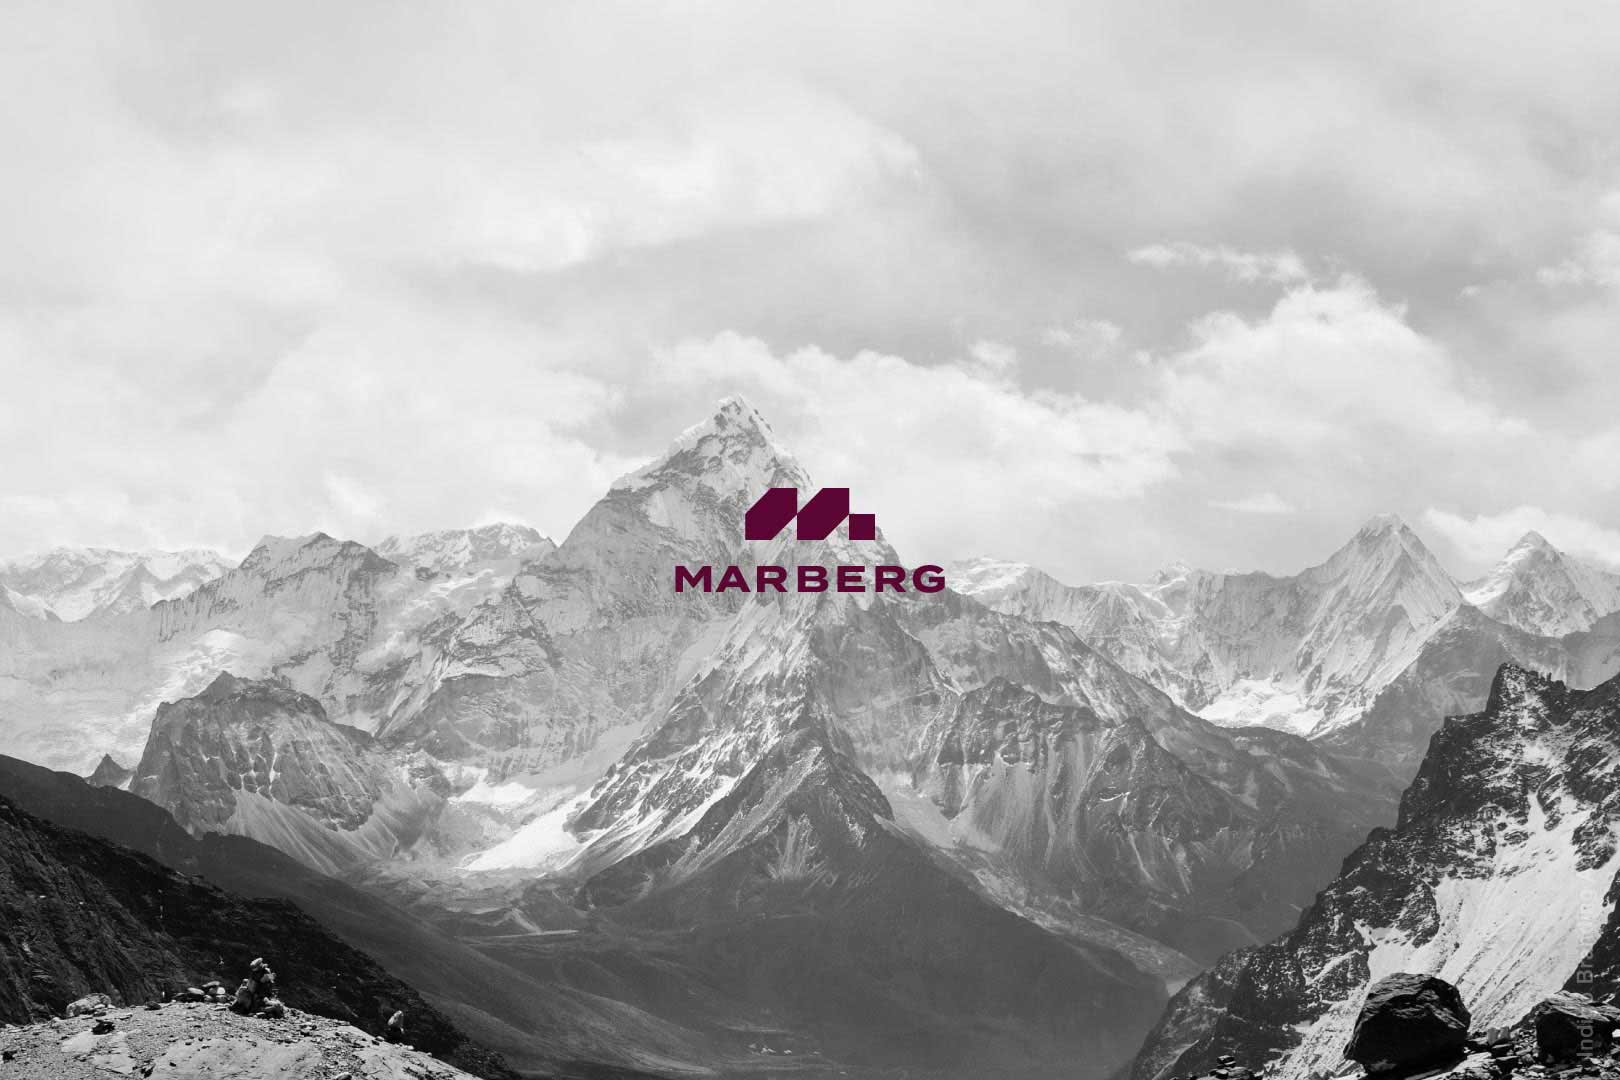 Marberg branding and logo design done by indigo branding in Yerevan